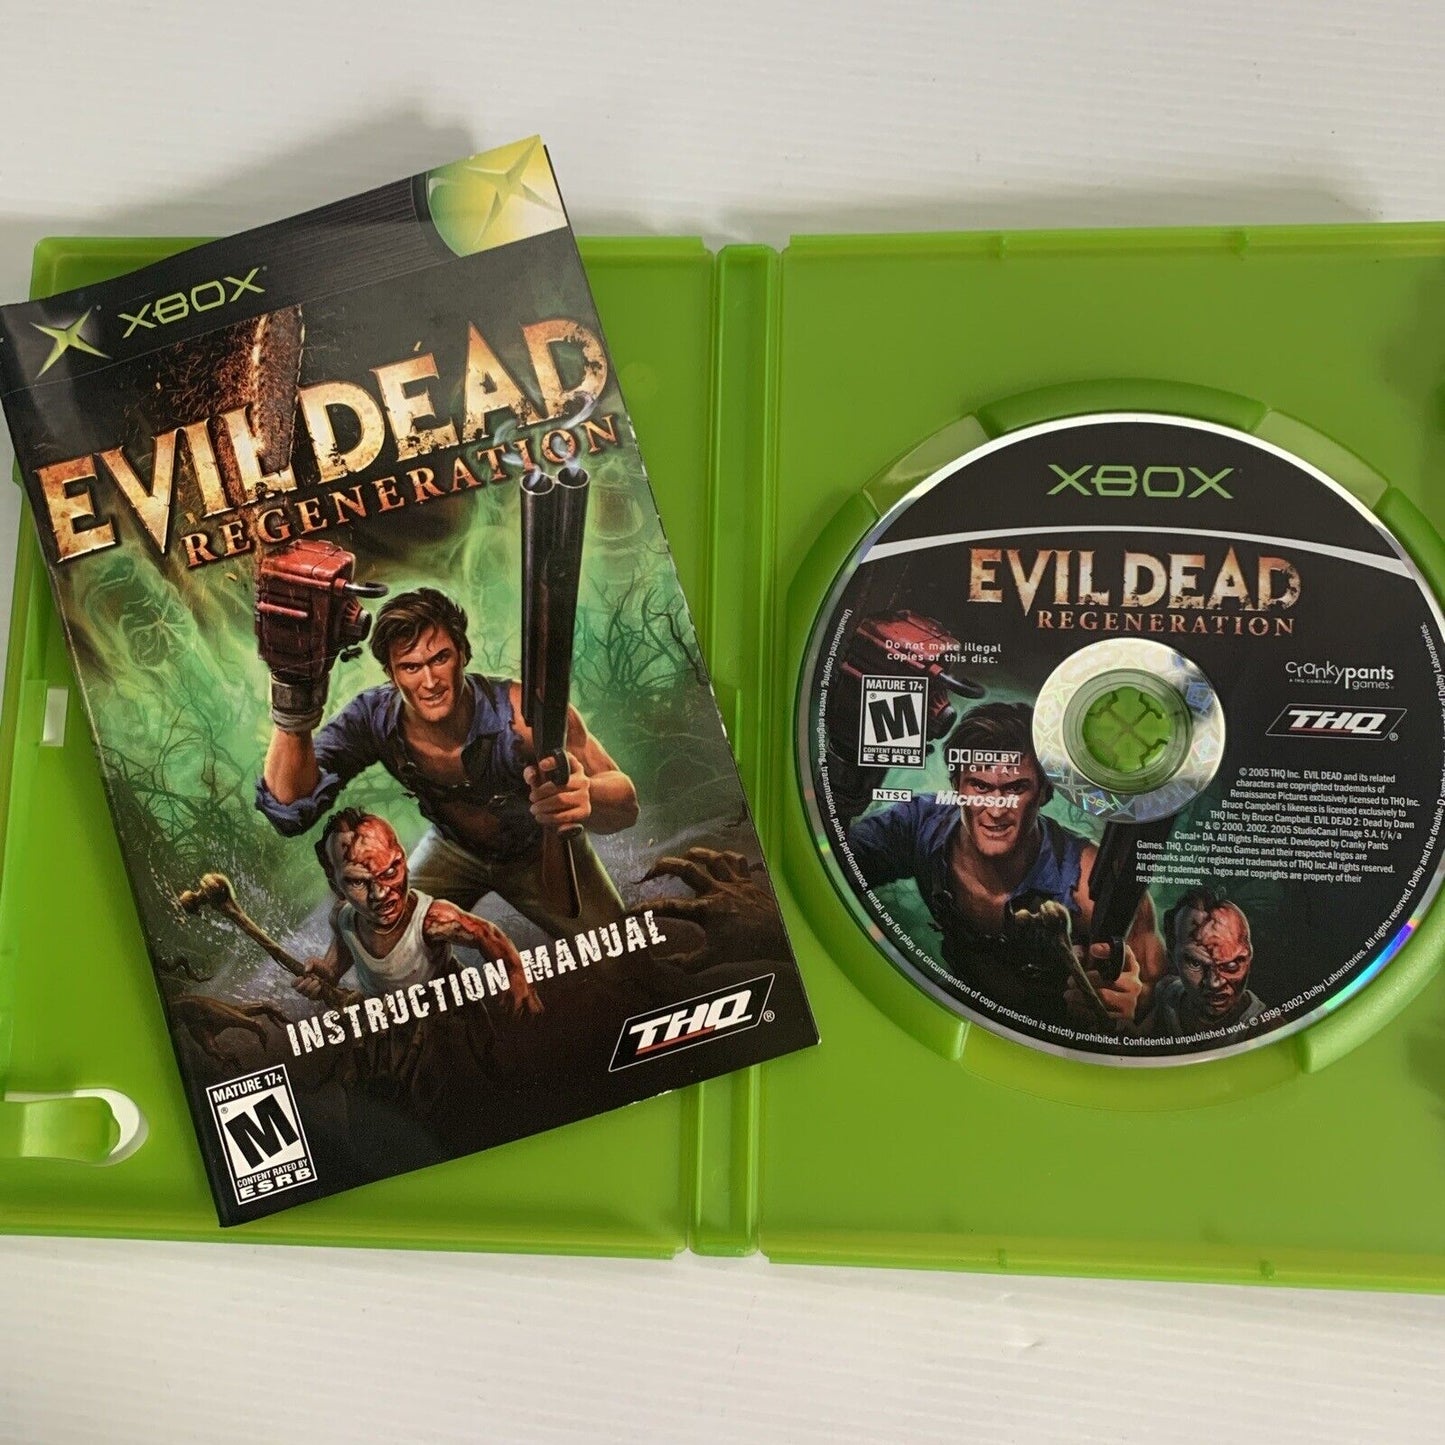 Evil Dead Regeneration Xbox Original Game NTSC